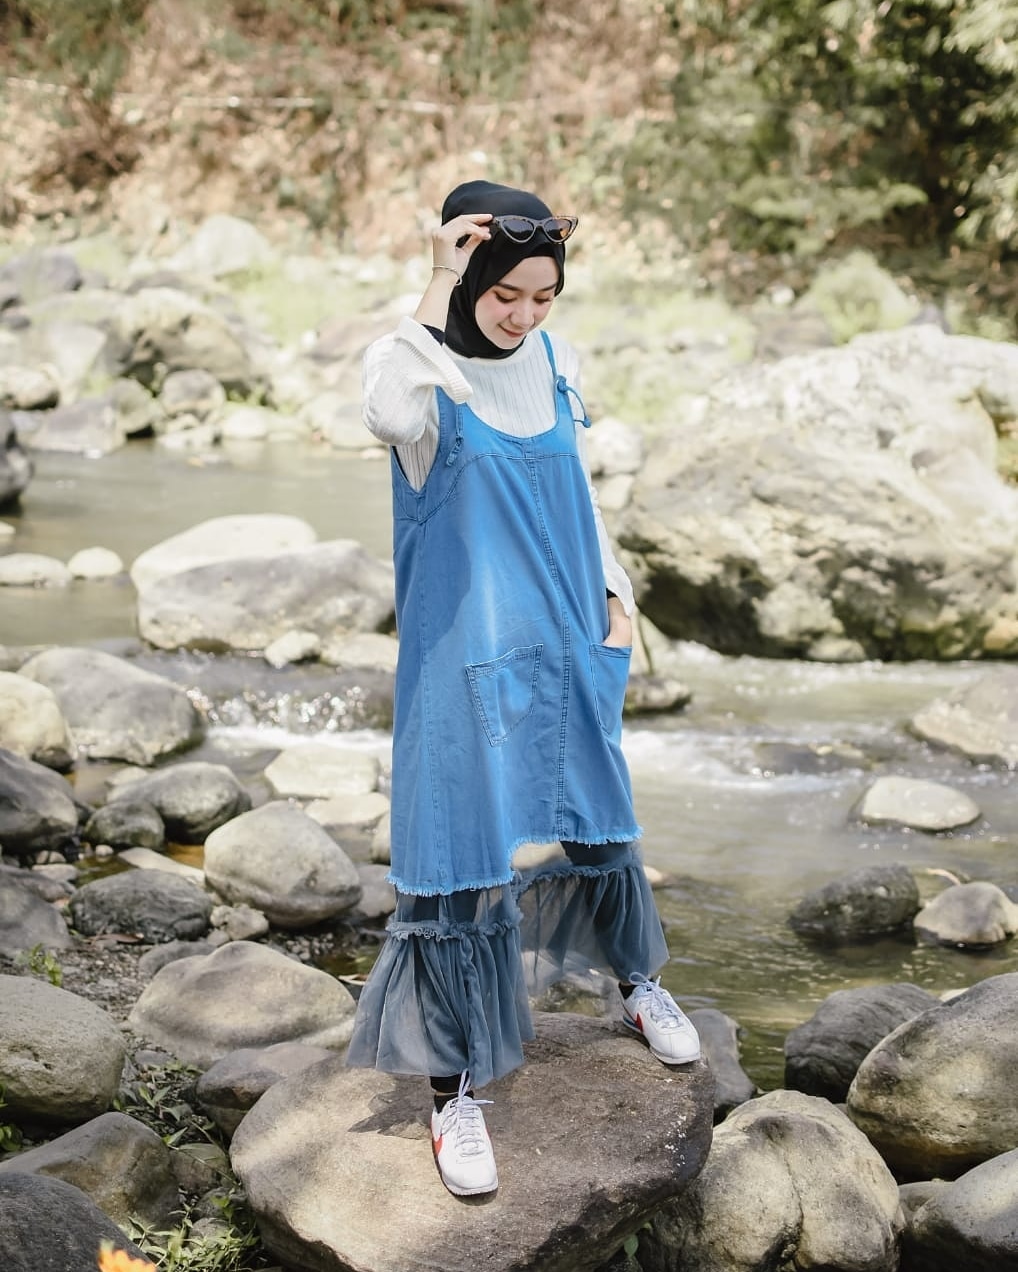 Baju Muslim Modern SAY TULLE JEANS OVERALL SR Jeans Wash Mix Tulle ( HANYA OVERALL ) Baju Wanita Jumpsuit Casual Pakaian Modern Baju Kerja Hijab Modern Terbaru Overall Kekinian Baju Kodok Baju Terusan Muslimah Jumpsuit Lucu Overall Keren Kekinian 2019